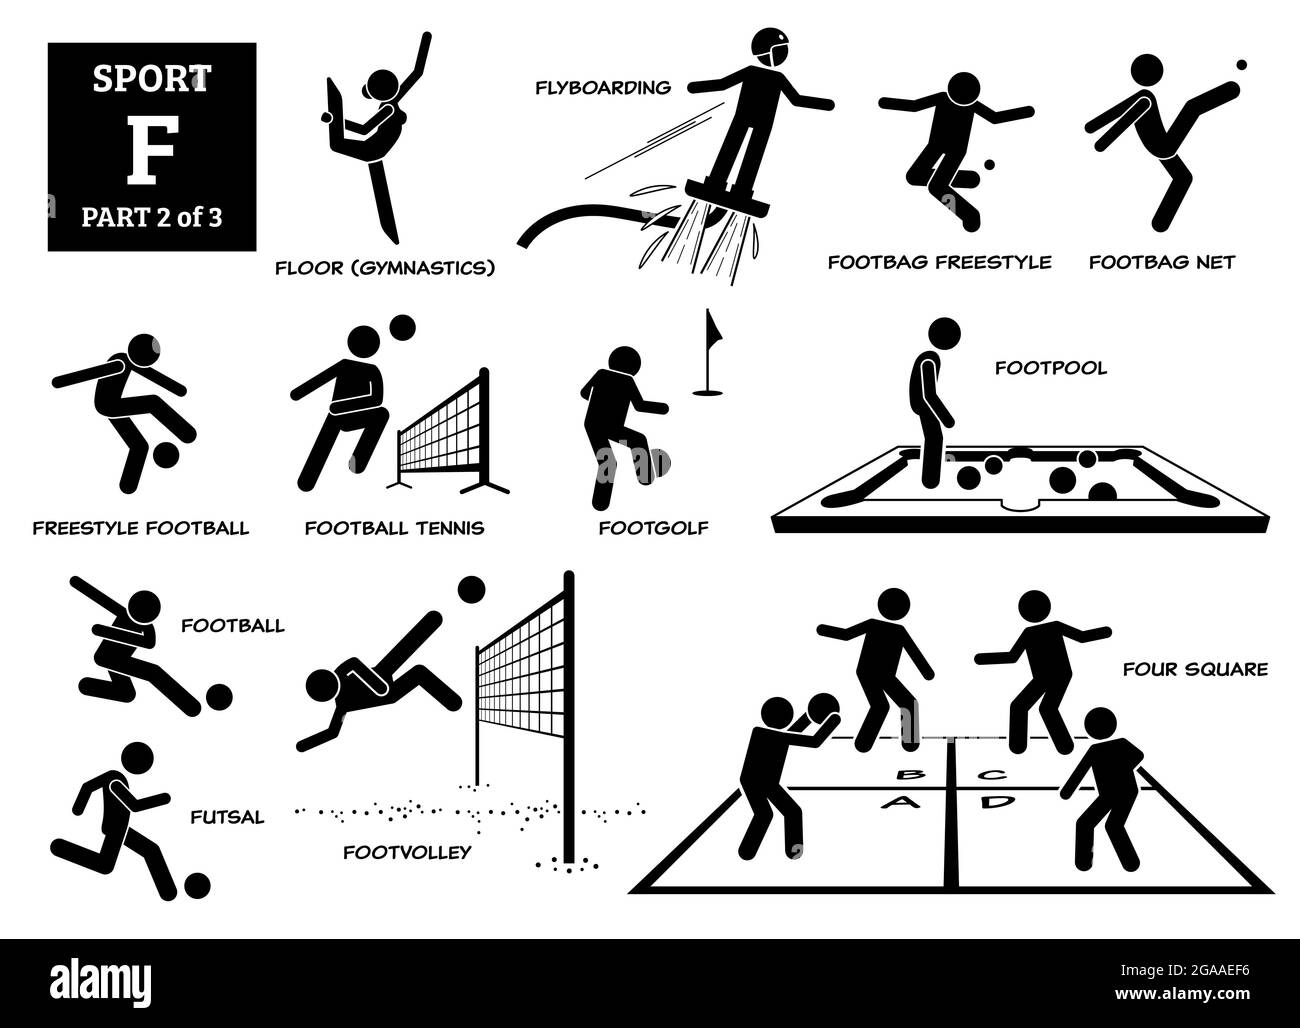 Sport games alphabet F vector icons pictogram. Floor gymnastic, flyboarding, footbag freestyle, net, freestyle football, football tennis, footgolf, fo Stock Vector